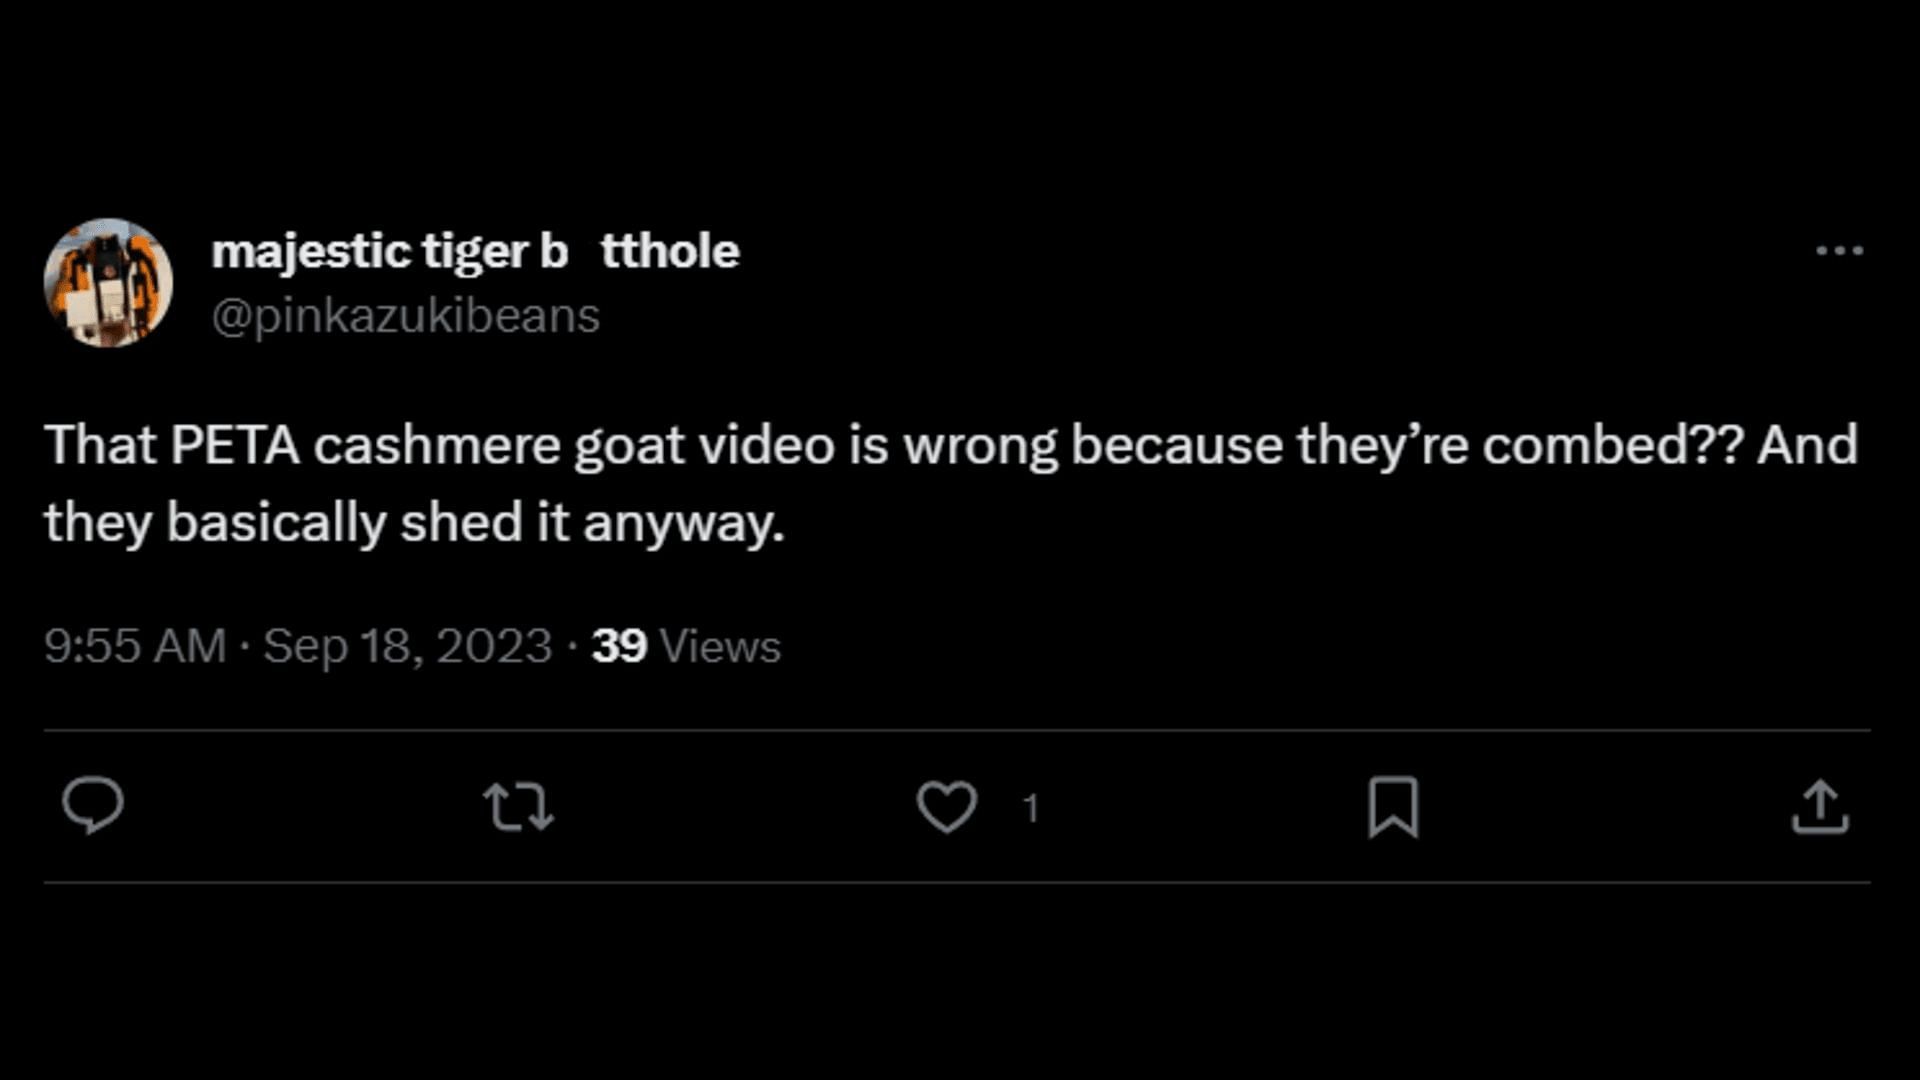 A netizen slams PETA for posting a factually wrong video. (Image via X/majestic tiger b*tthole)